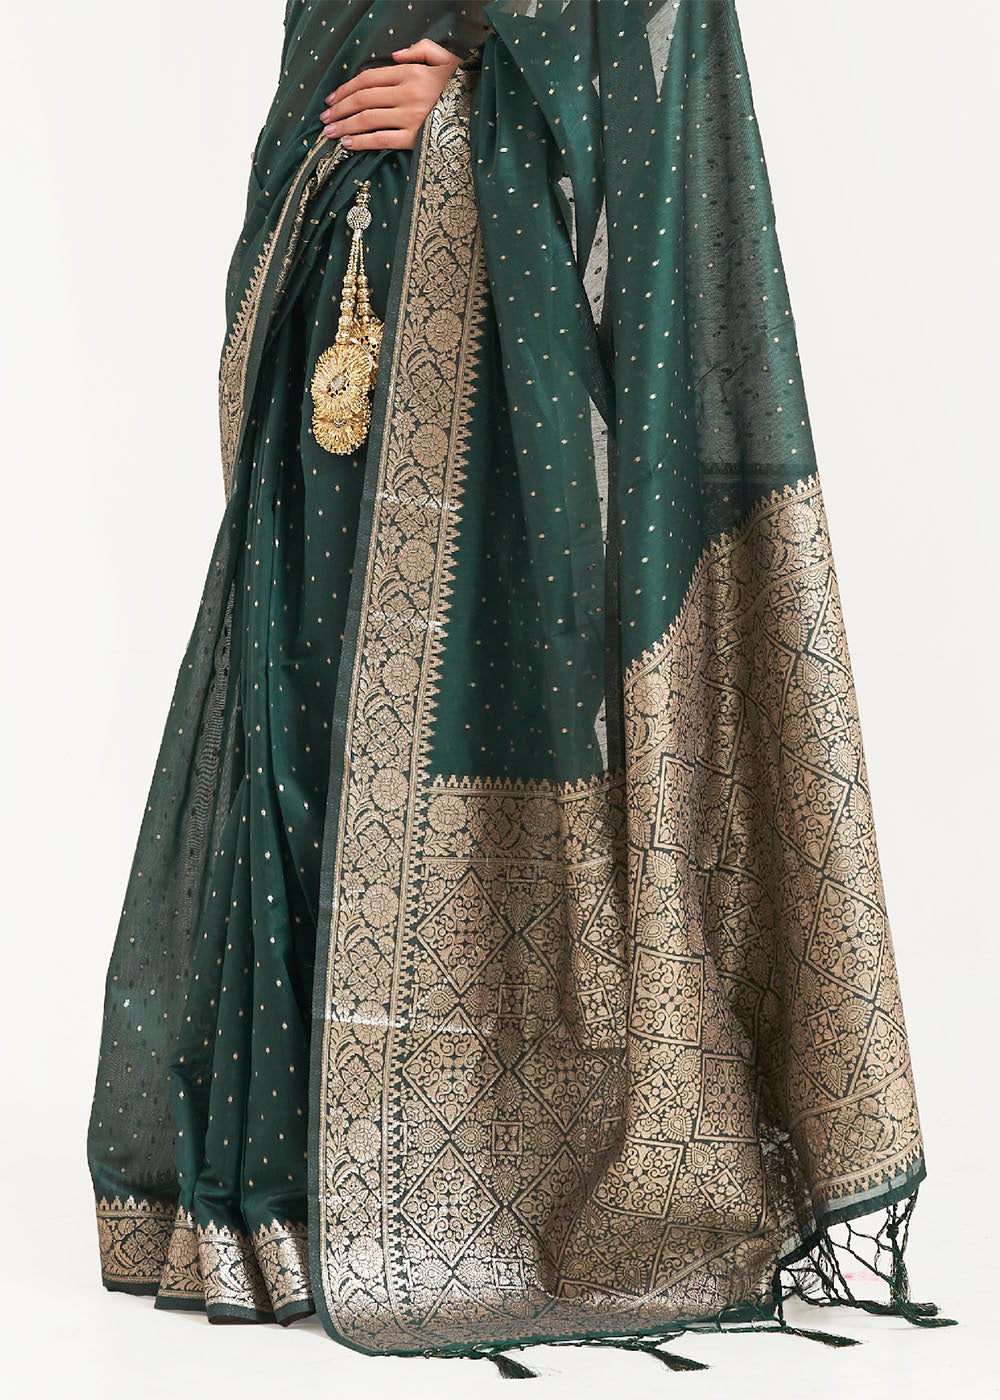 Castleton Green Woven Banarasi Silk Saree with overall Mukaish work